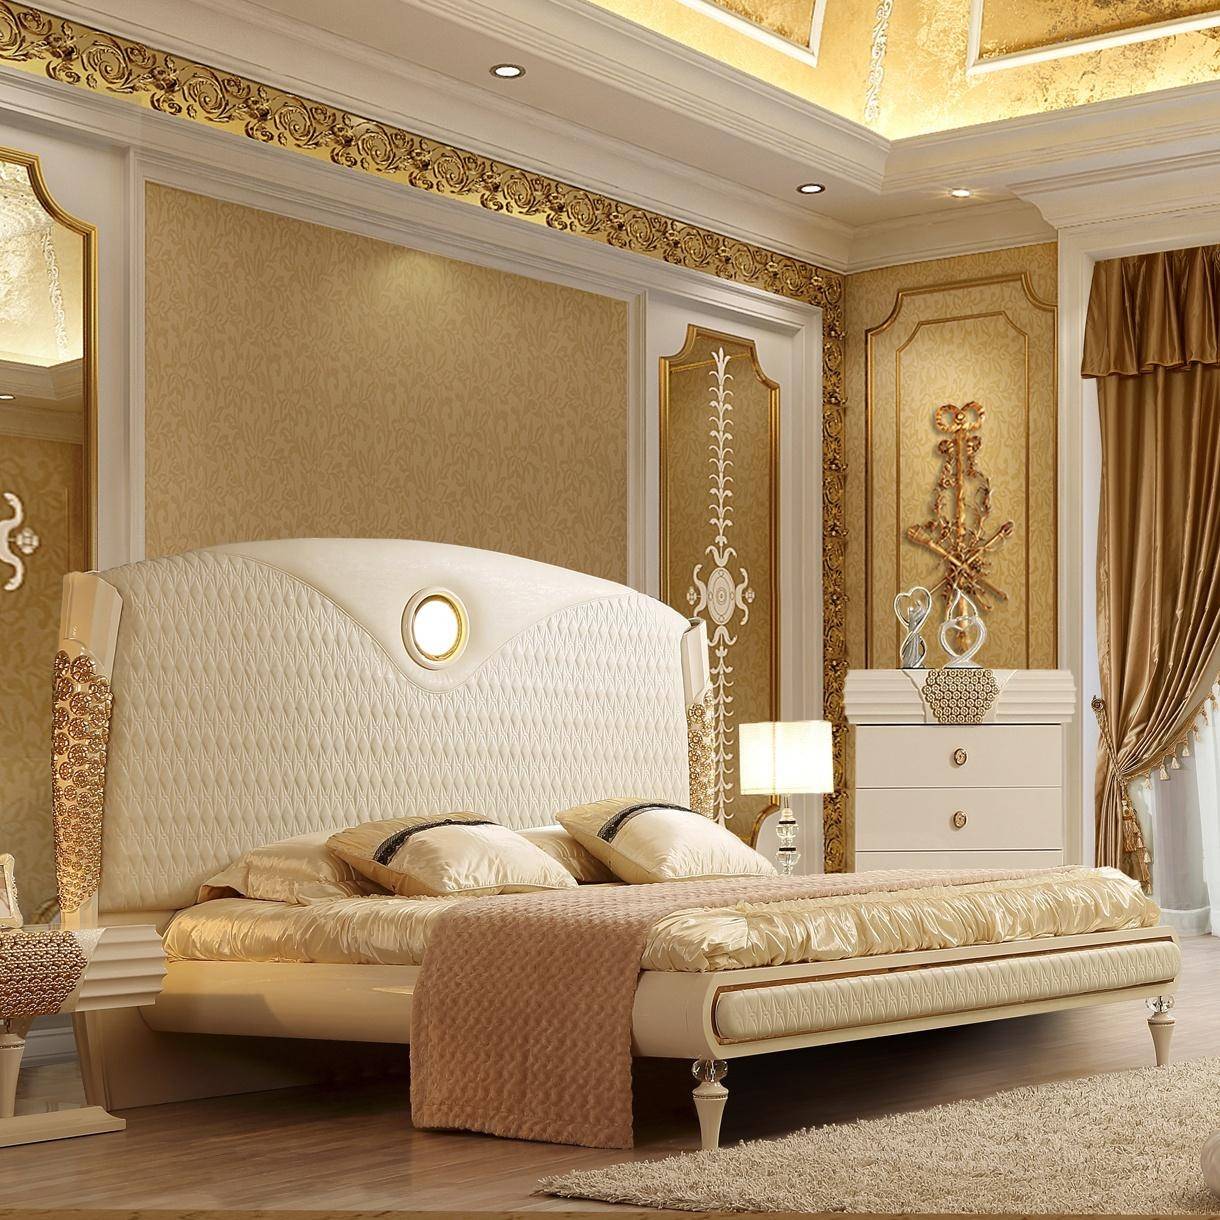 Homey Design Hd 901 California King, California King Leather Sleigh Bed